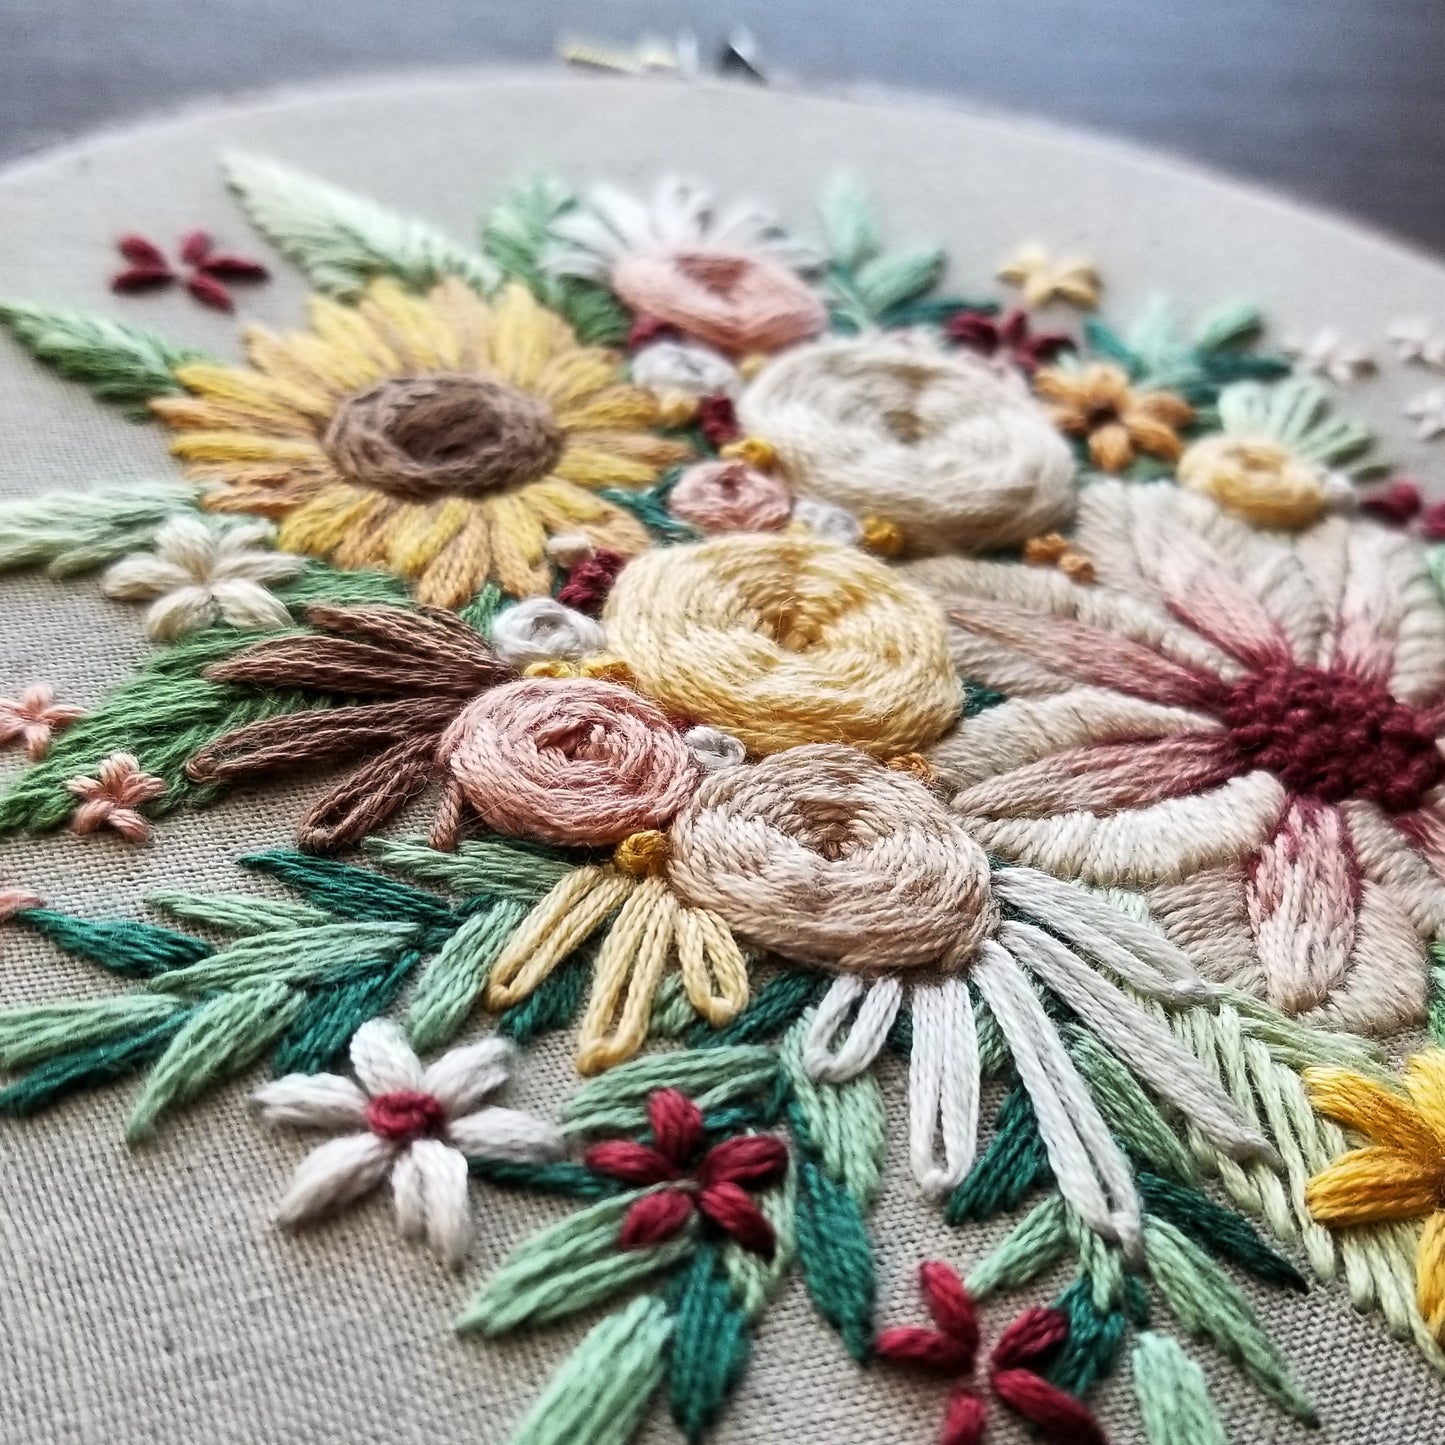 Floral Harvest Embroidery Pattern (PDF)